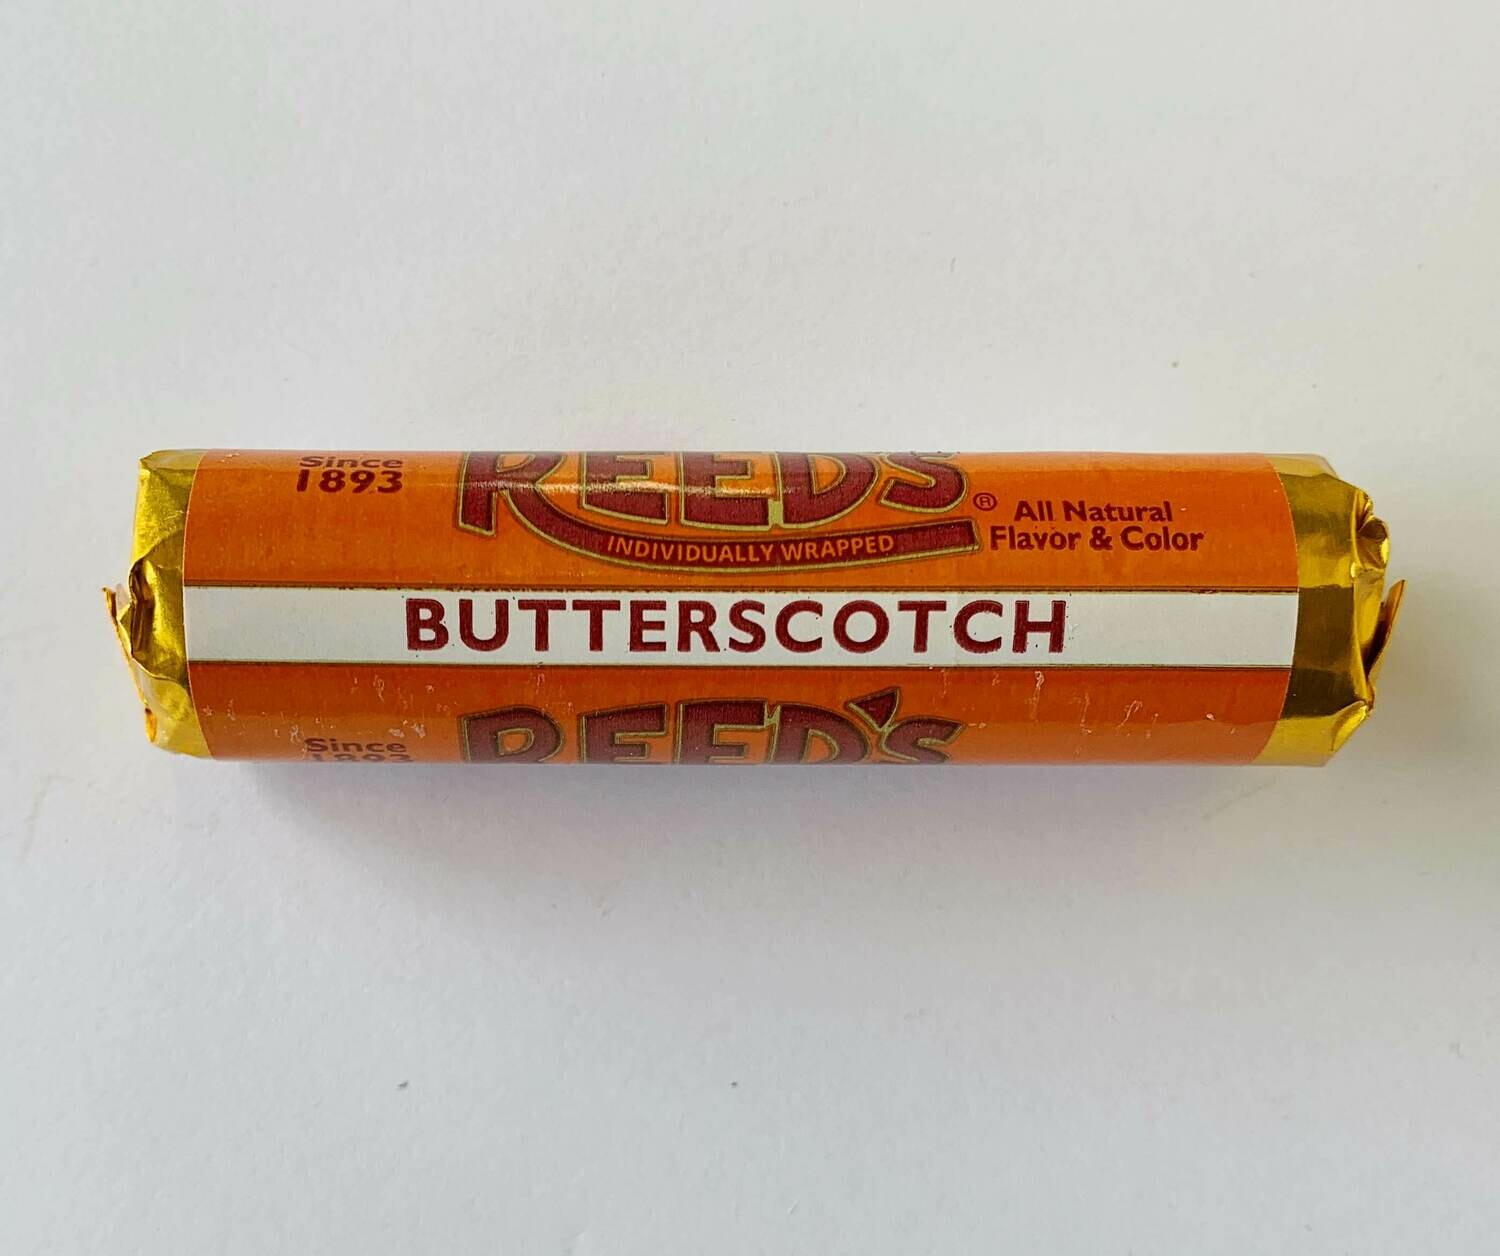 Reed's Butterscotch Hard Candy Rolls